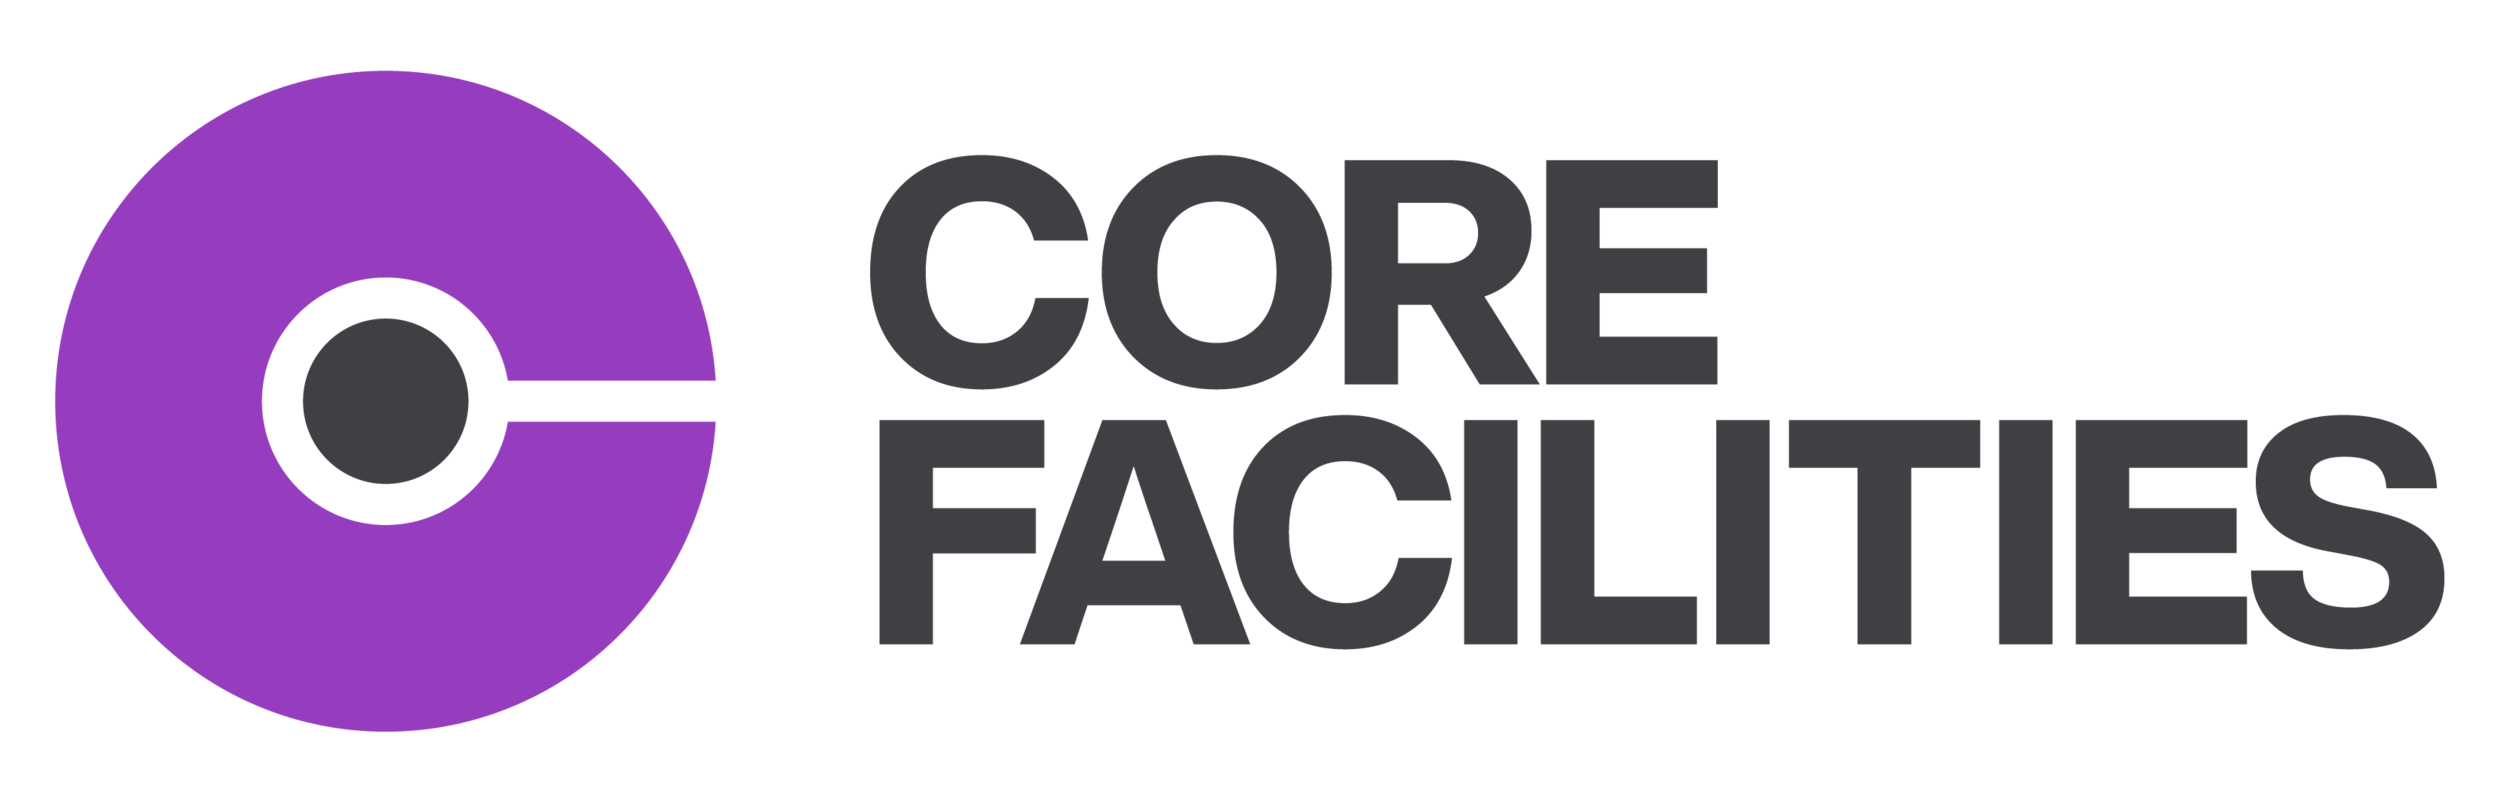 Core facilities logo (2).png